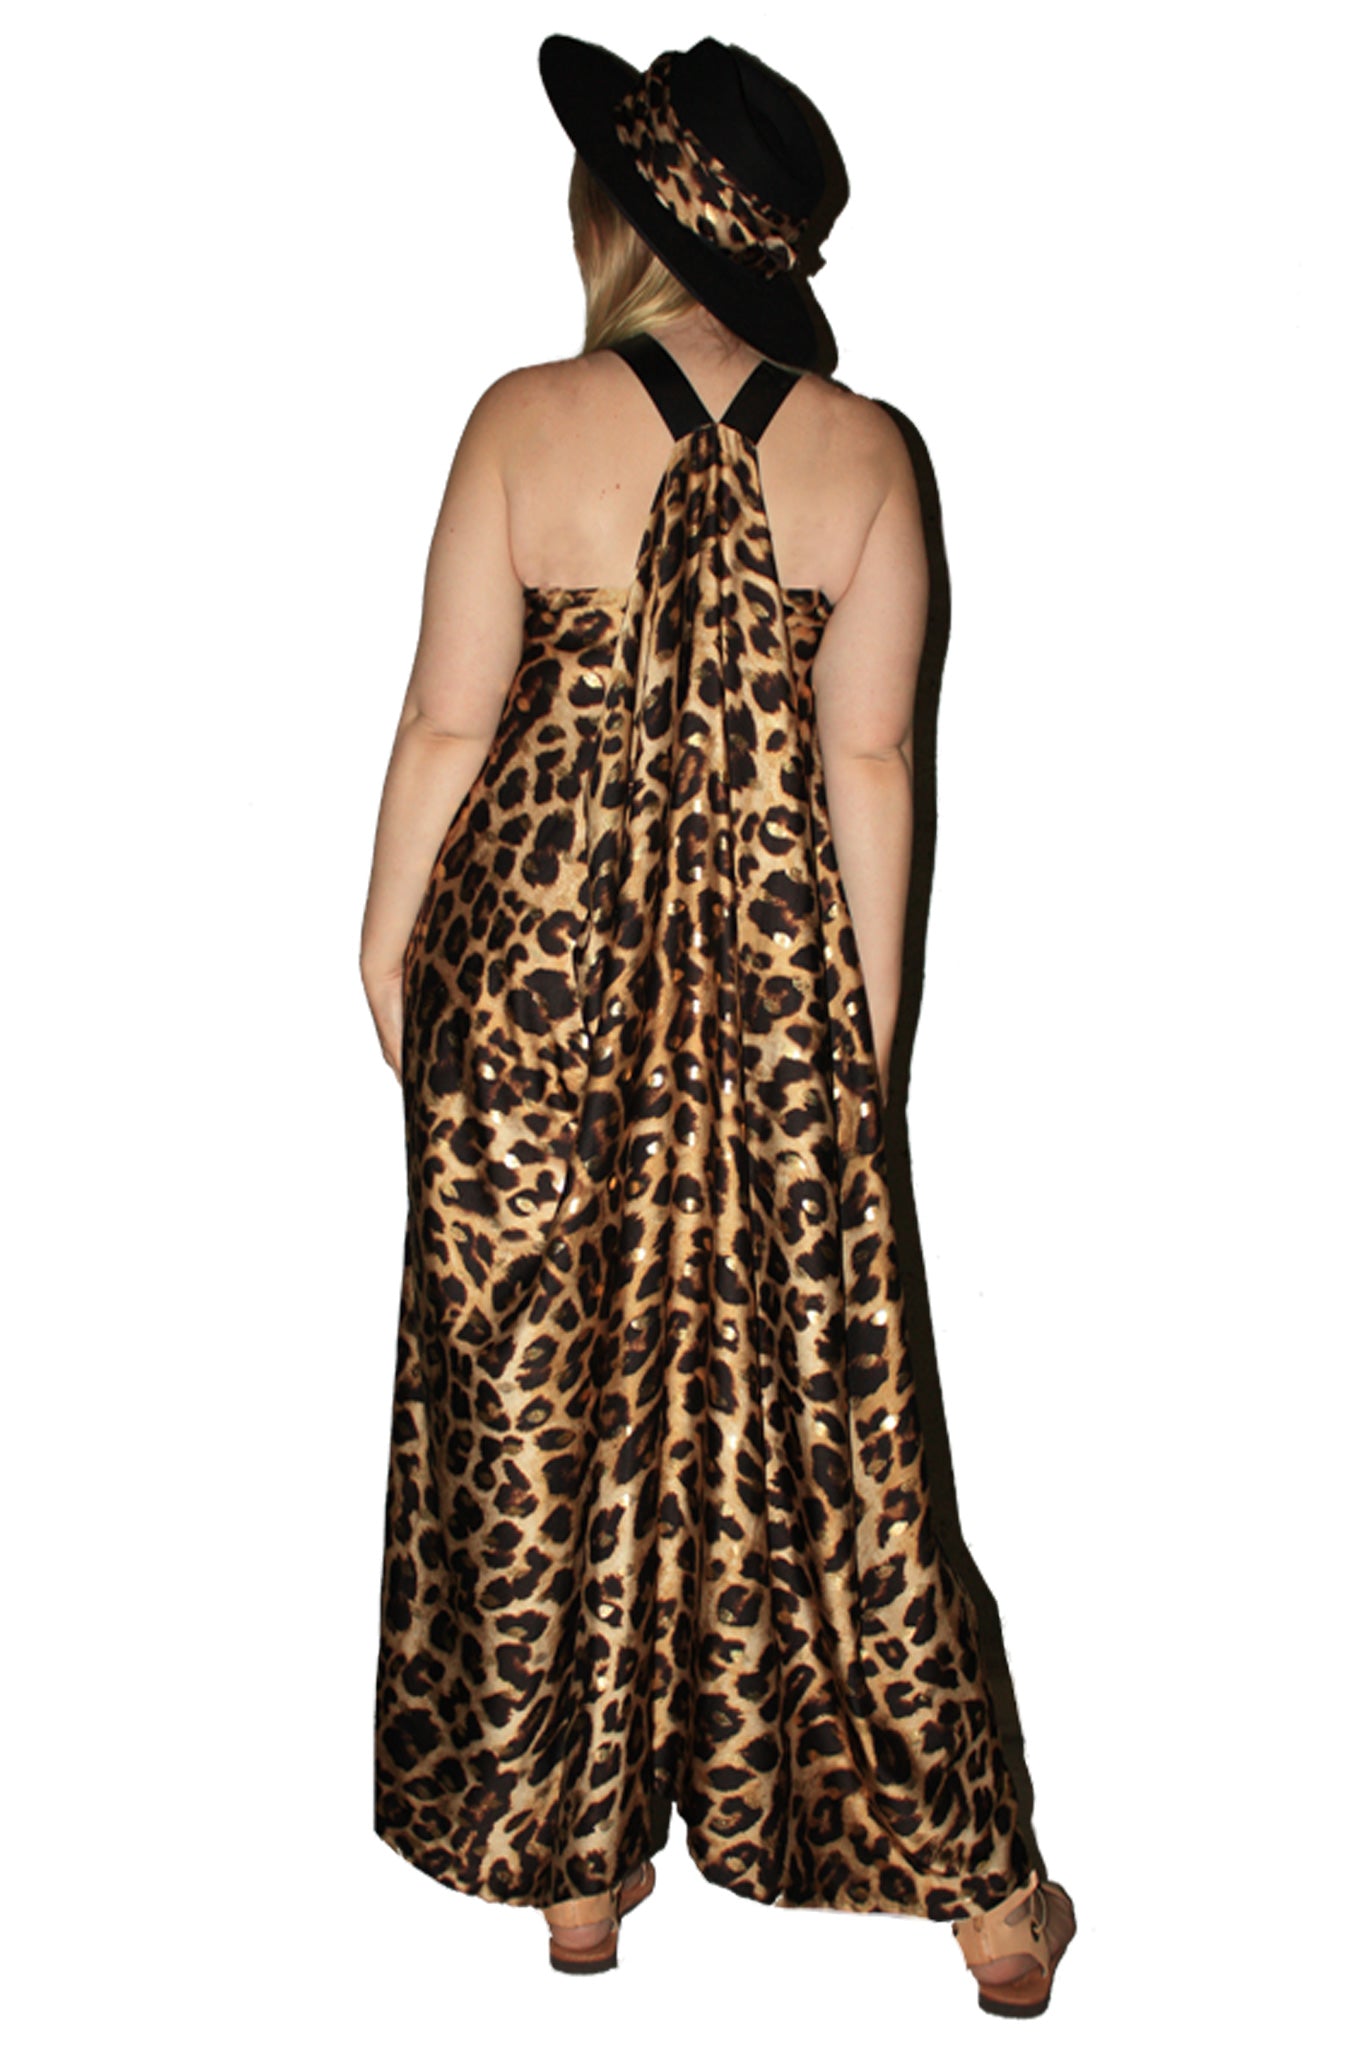 Leopard Lover Dress - Curve